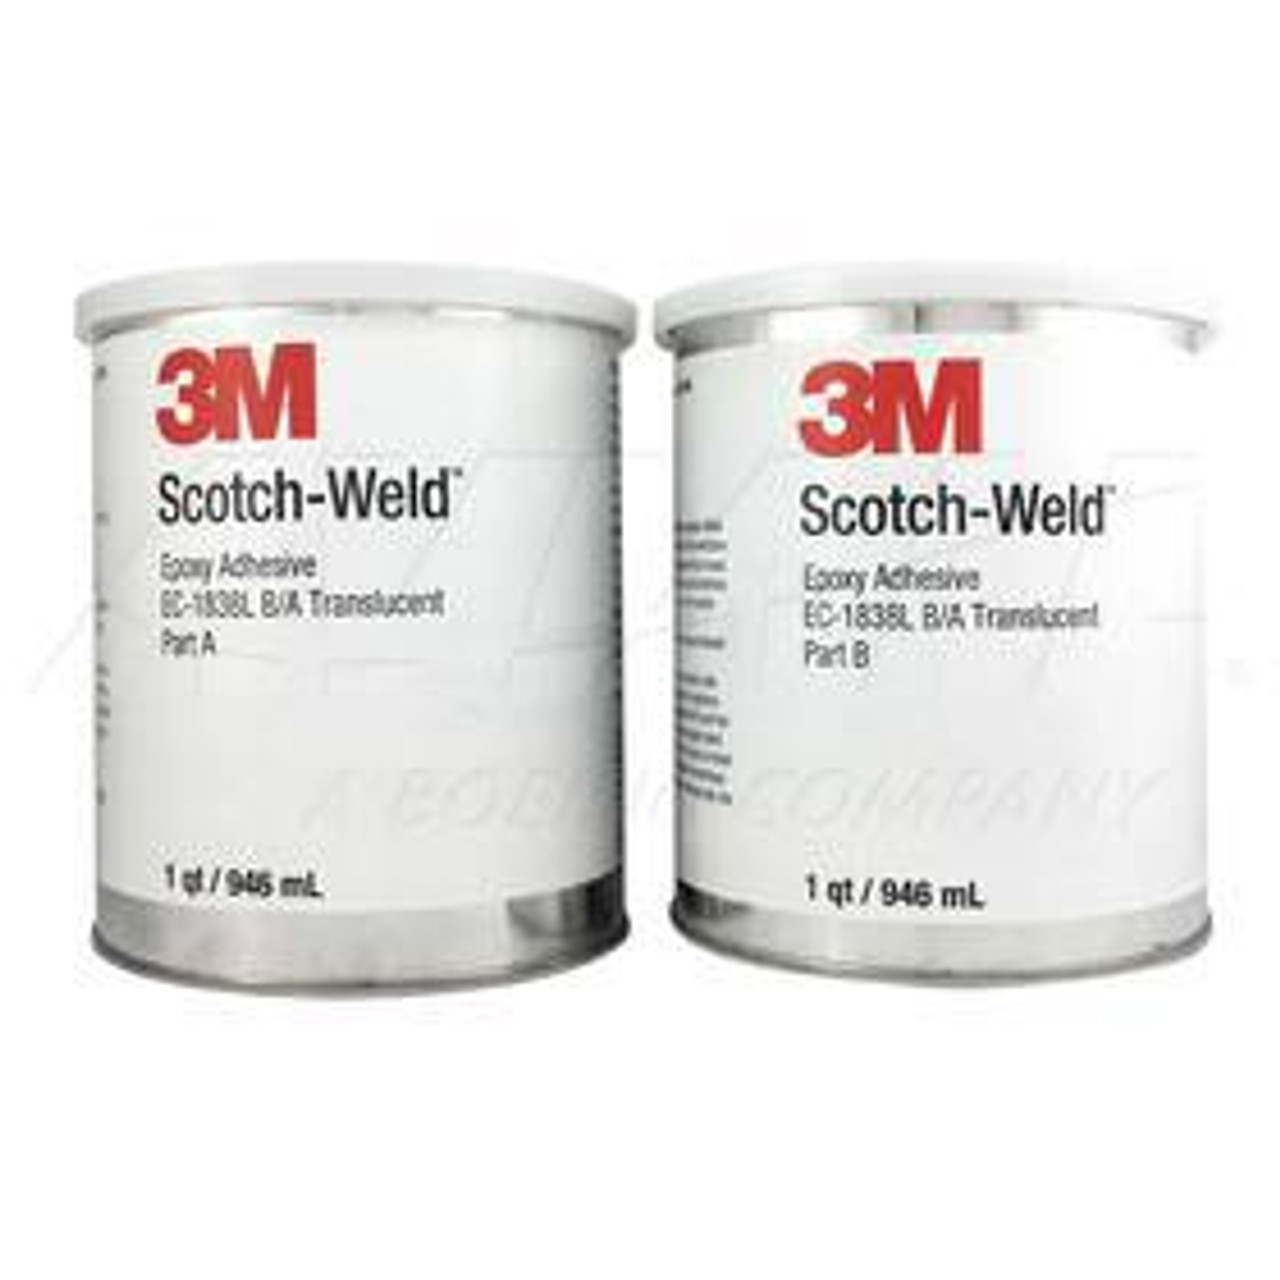 3M 021200-65217 Scotch-Weld EC-1838 B/A Transparent Epoxy Adhesive - Quart  Kit at